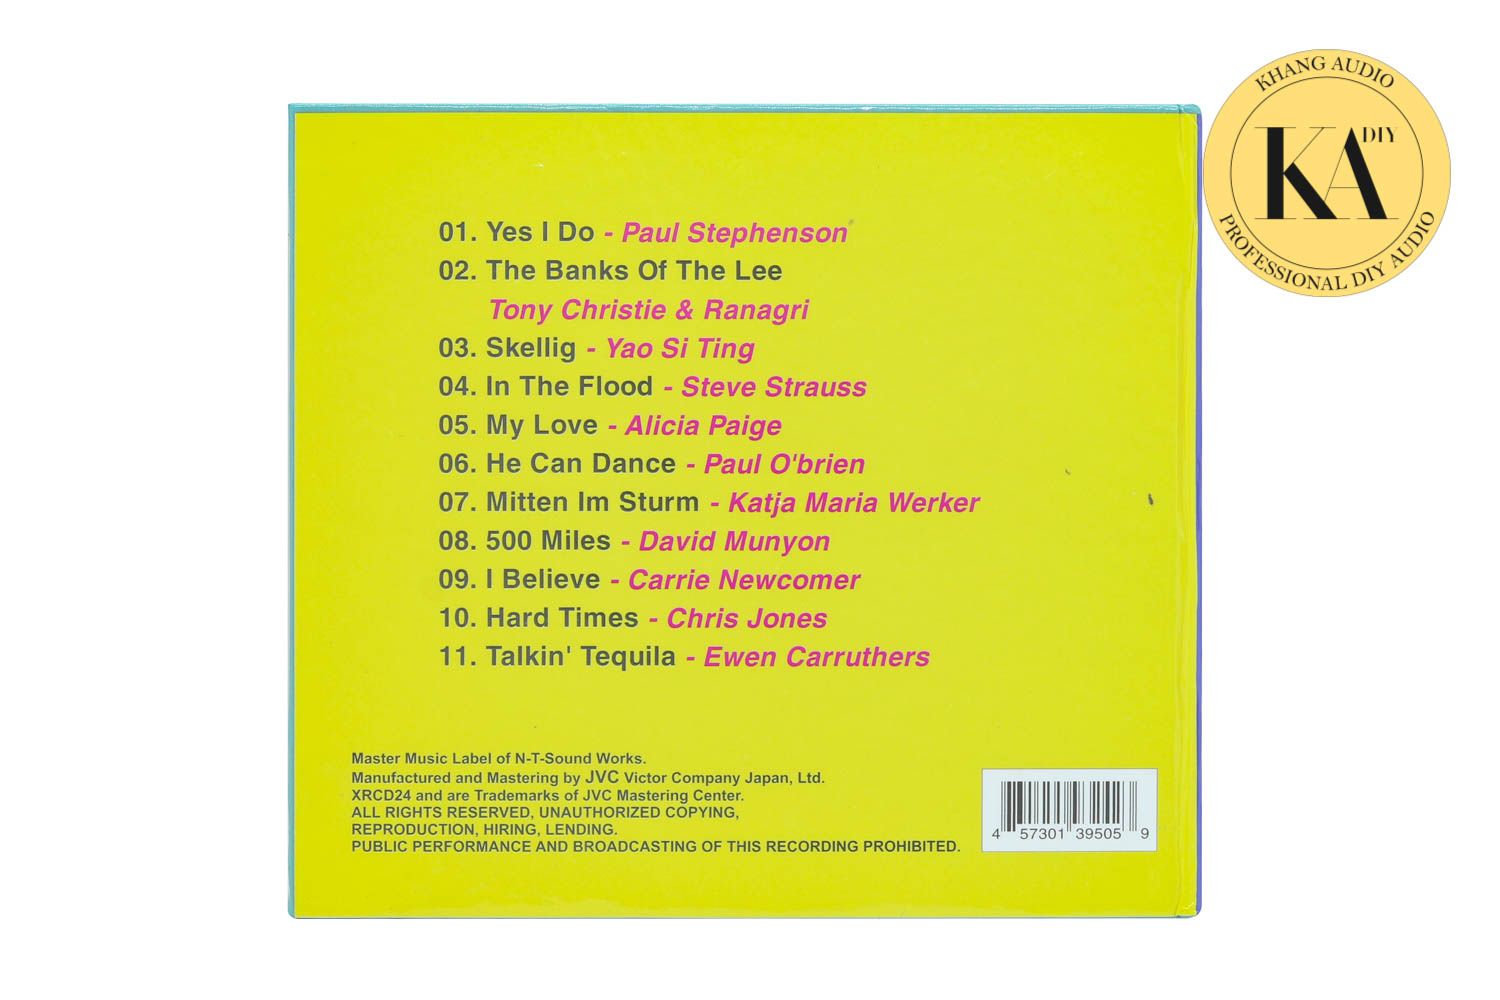 Combo CD Audiophile Test Dàn Golden Collection Khang Audio 0336380099